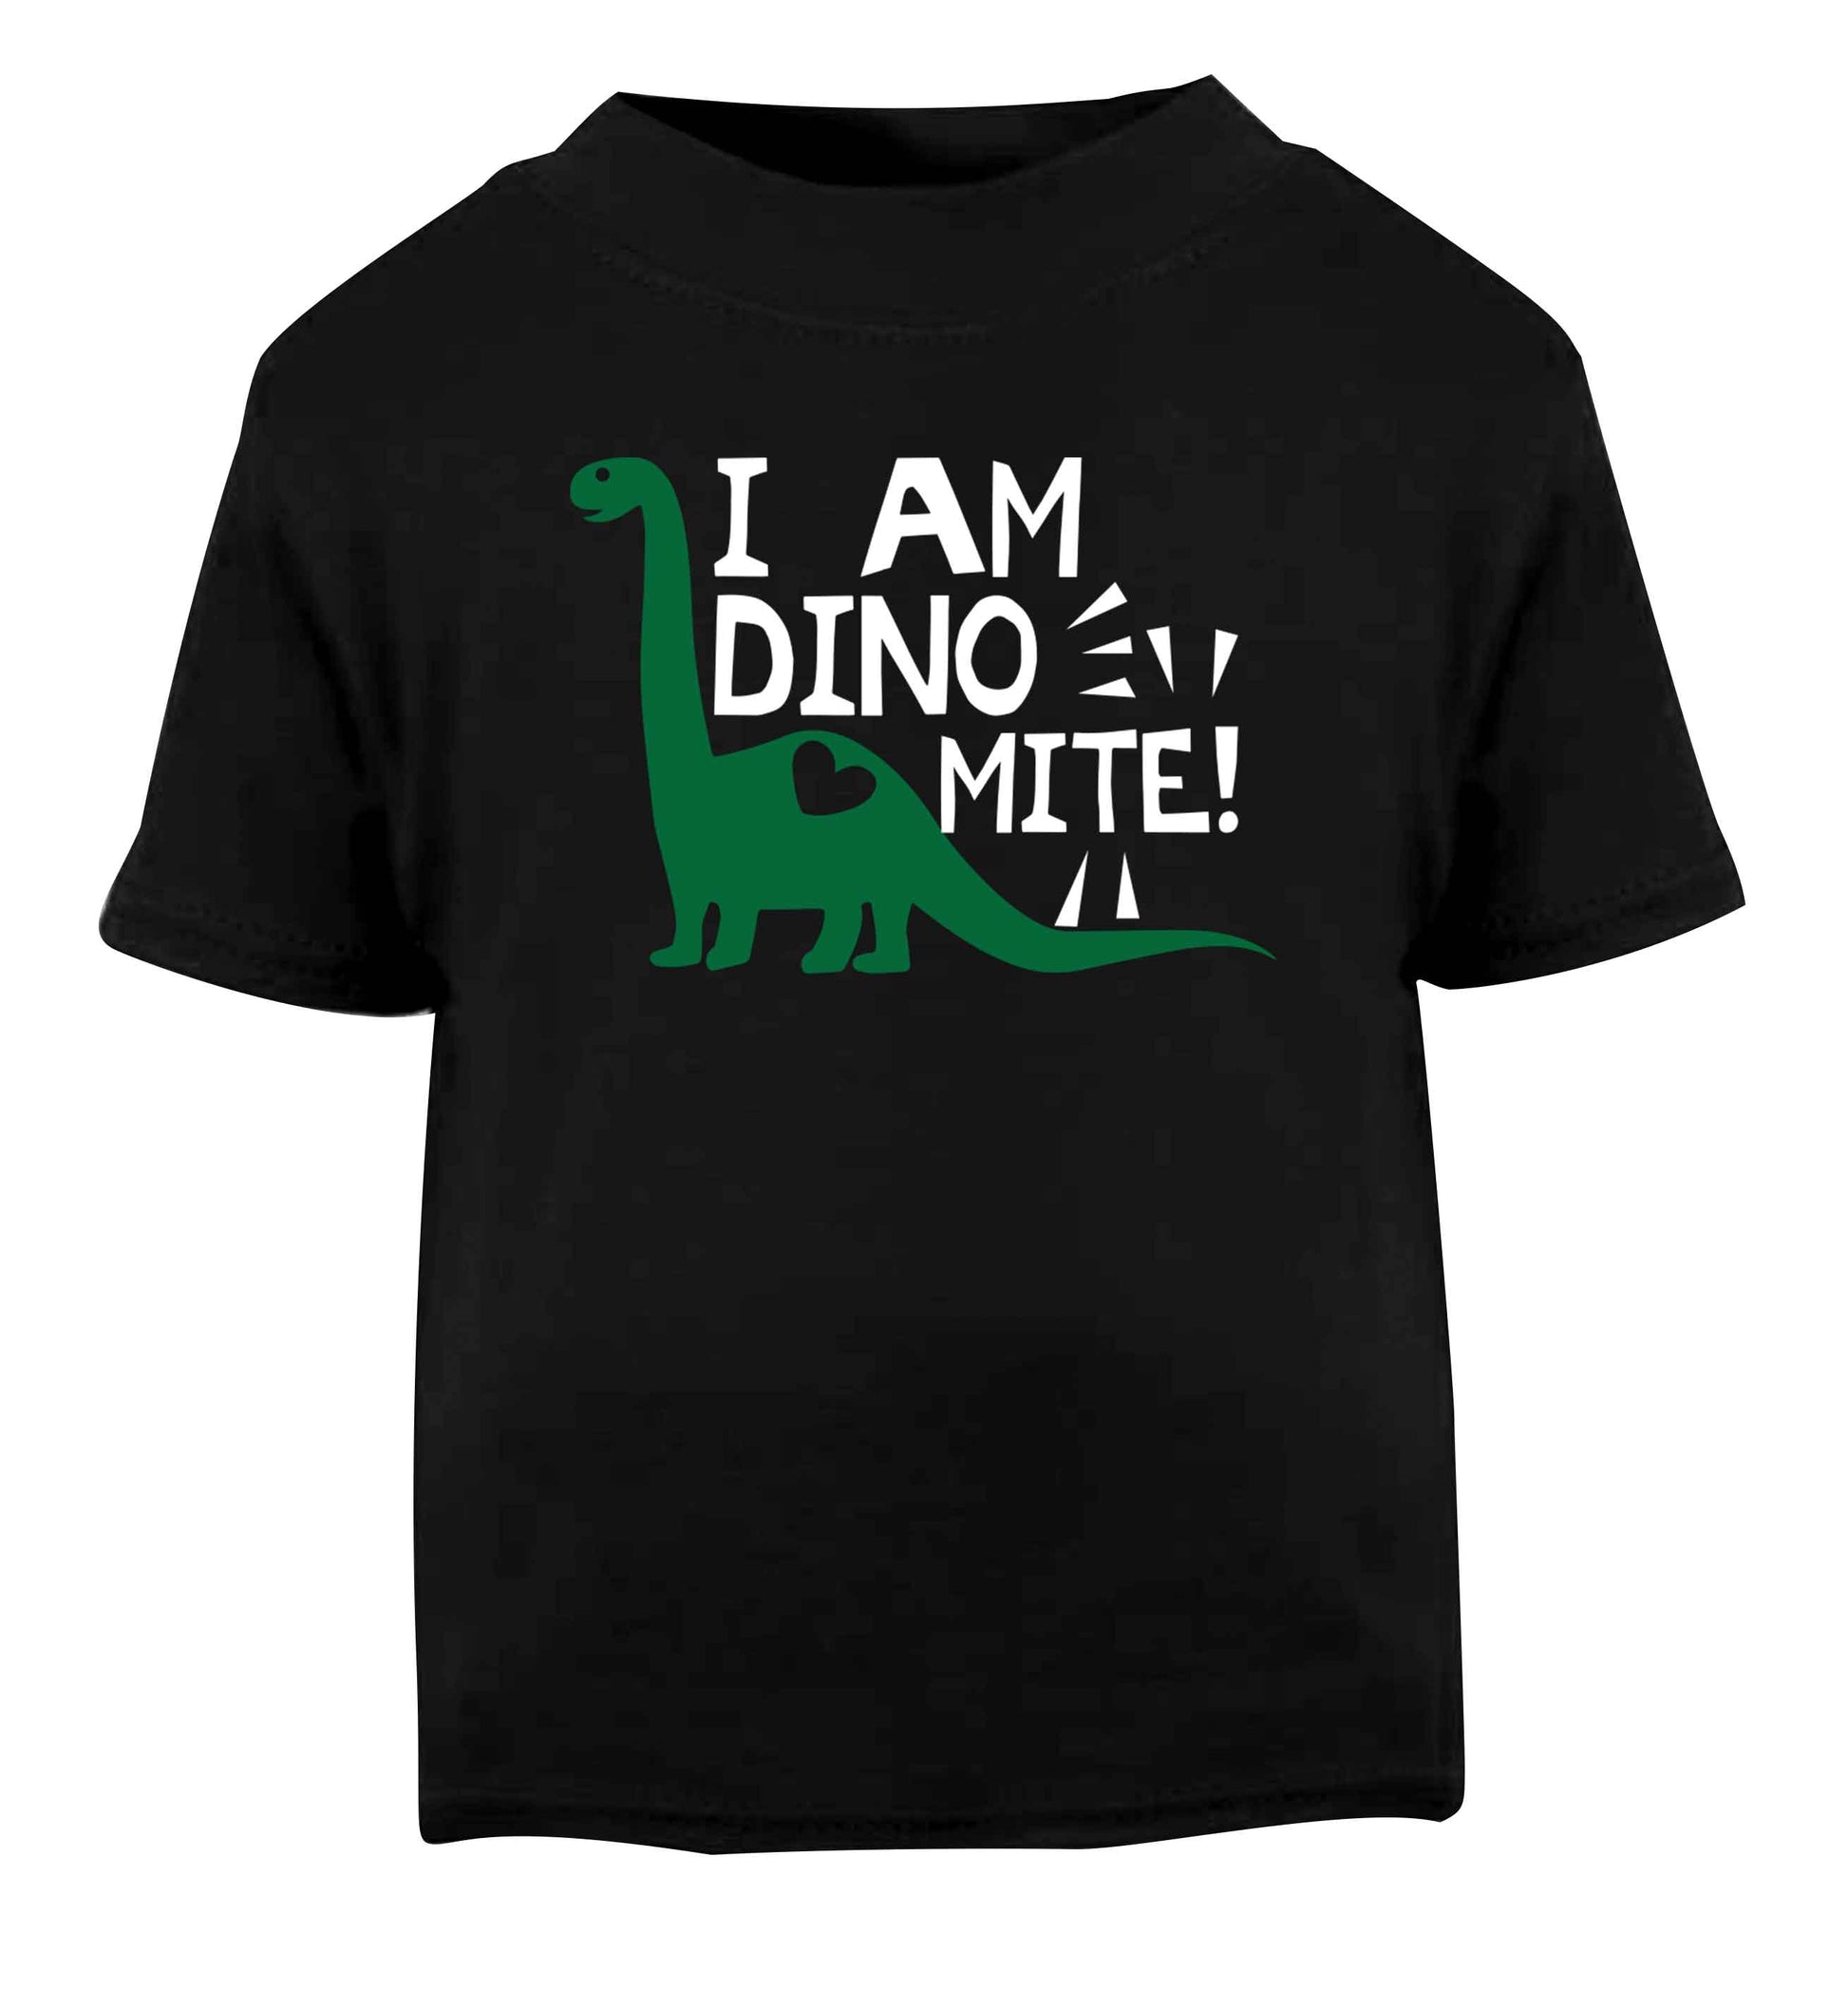 I am dinomite! Black Baby Toddler Tshirt 2 years